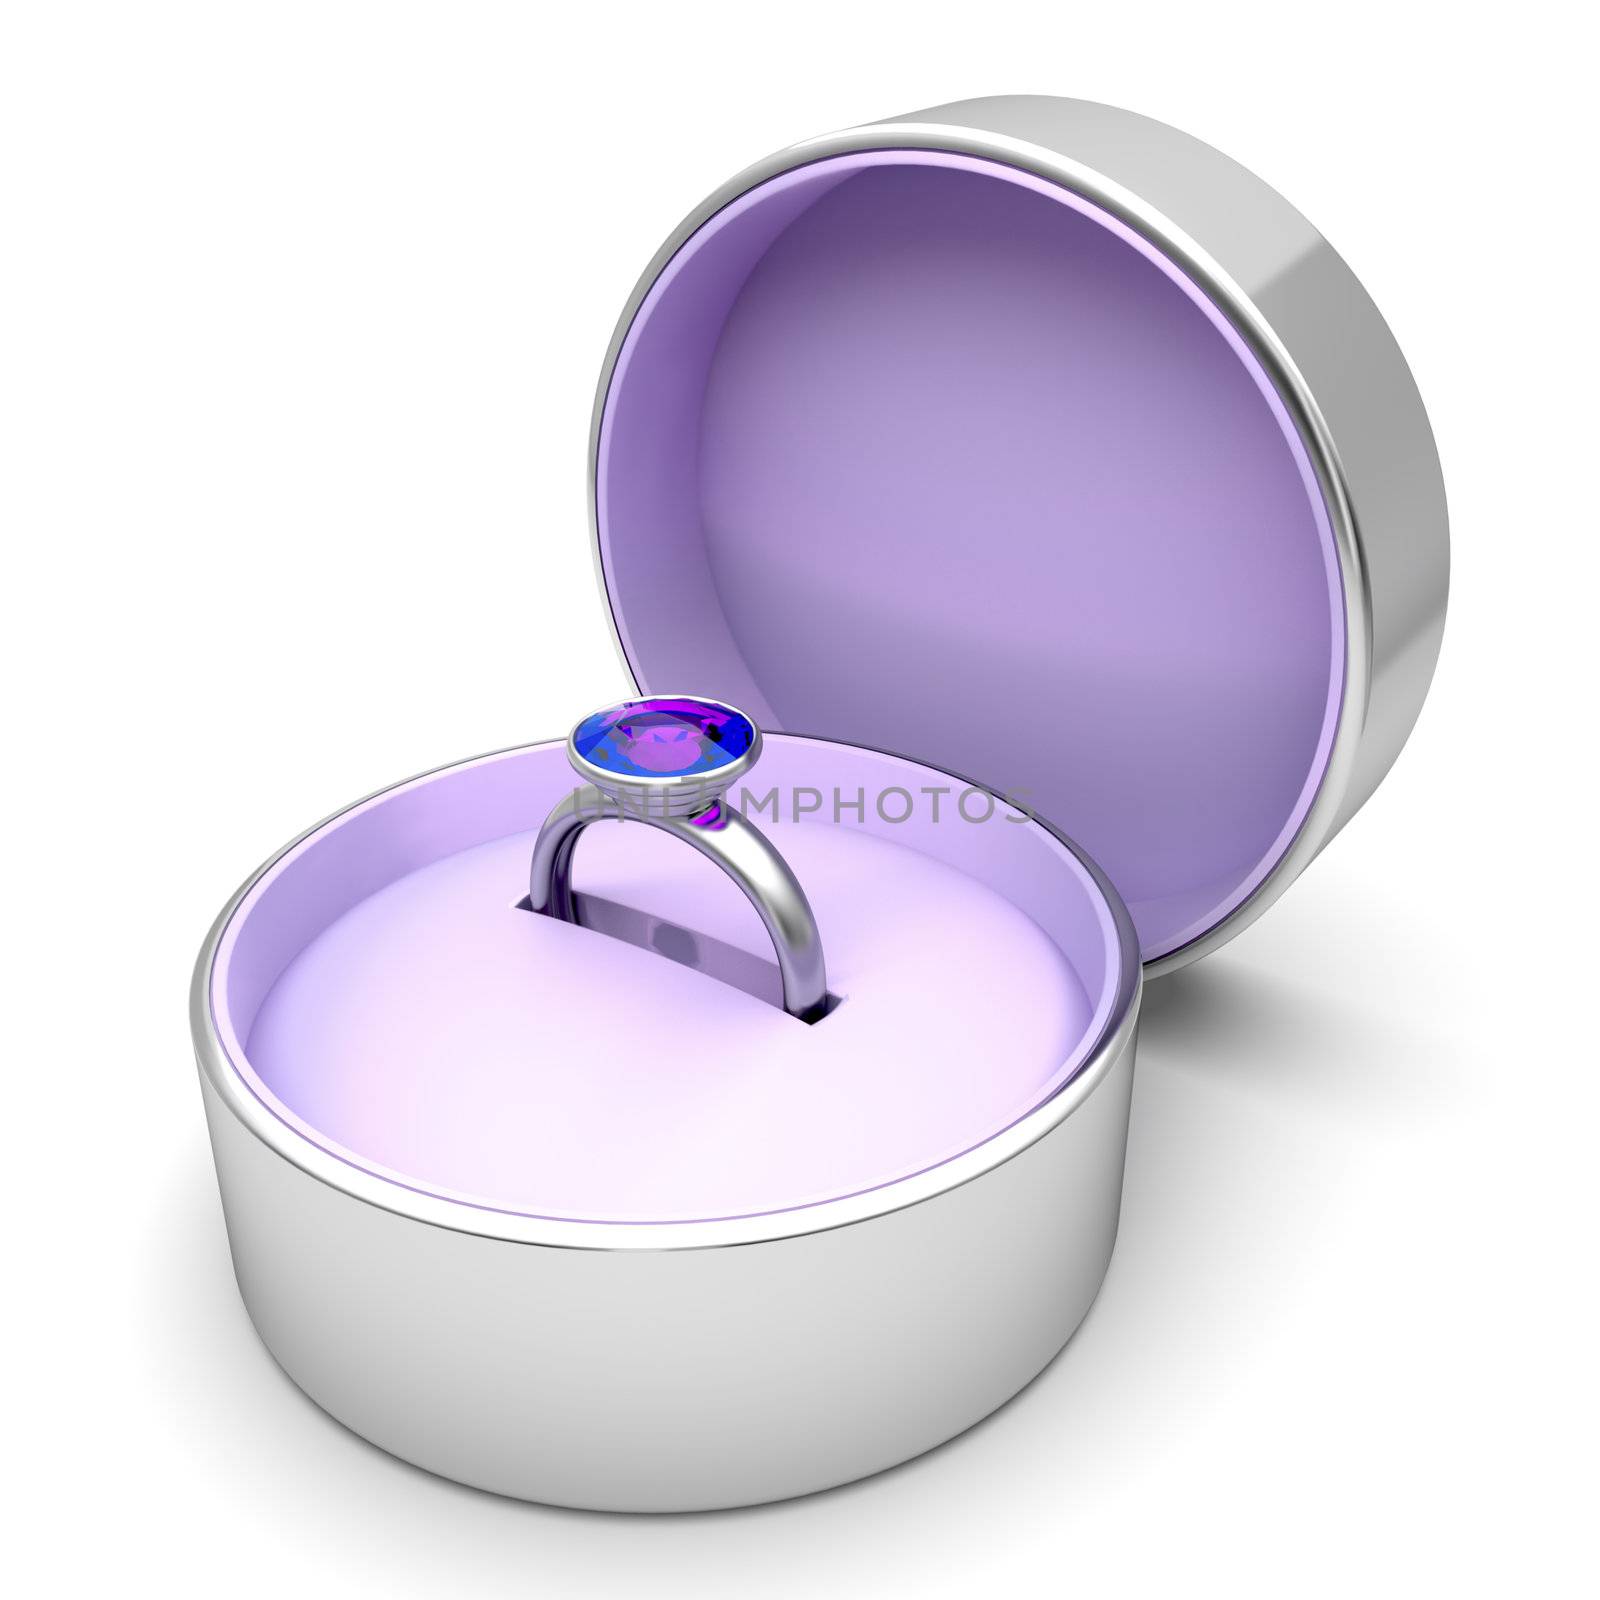 Diamond ring in metal gift box